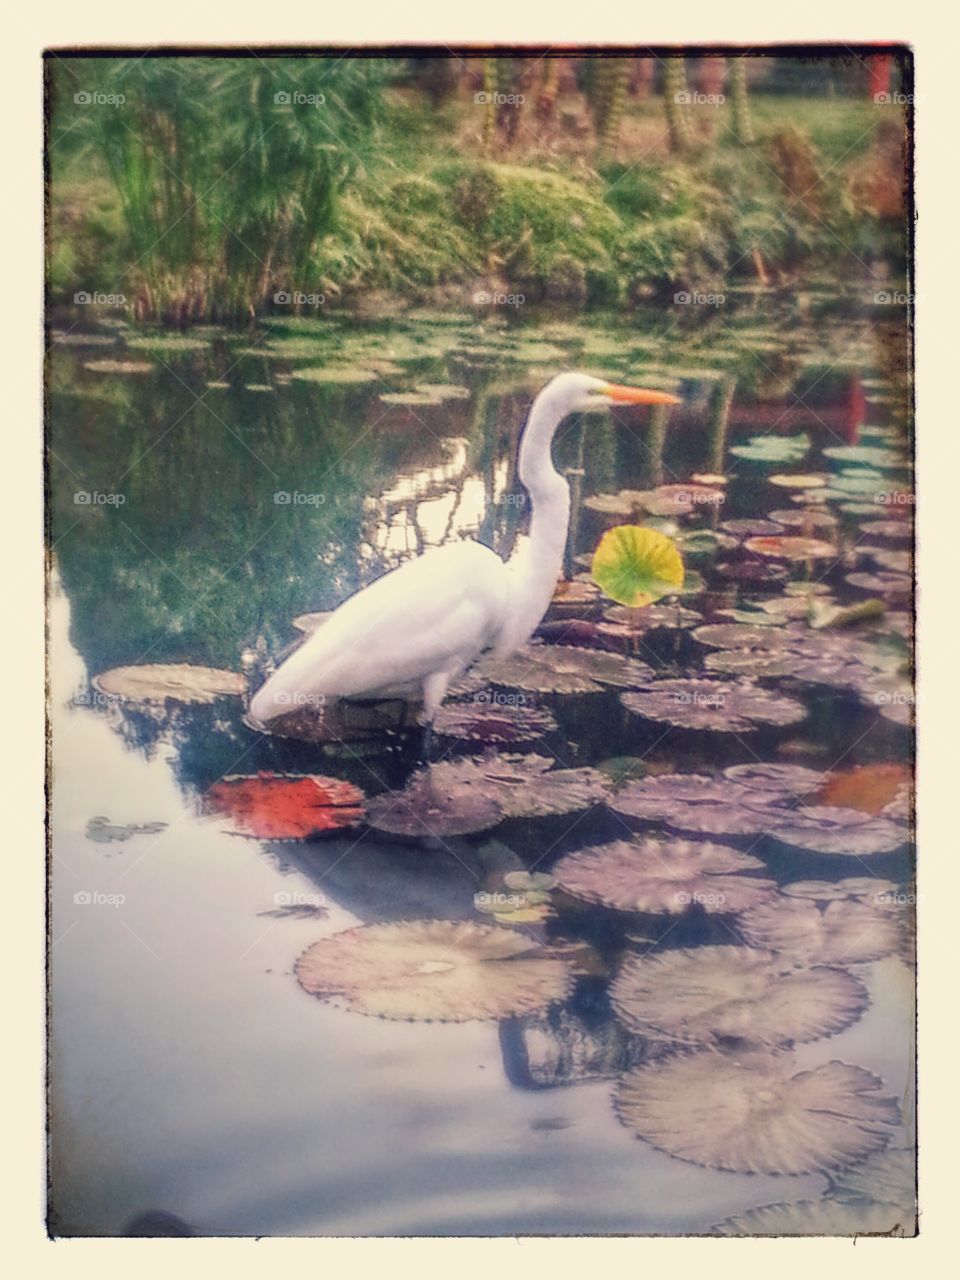 Majestic White Bird in Beautiful Lilypad Pond - Walt Disney World Epcot - Orlando Florida 